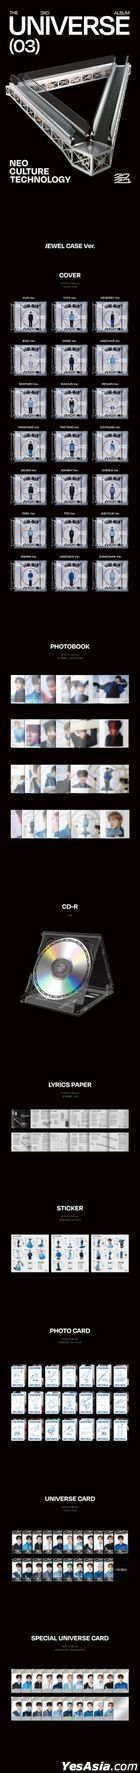 NCT Vol. 3 - Universe (Jewel Case Version) (Jeno Version) + Poster in Tube